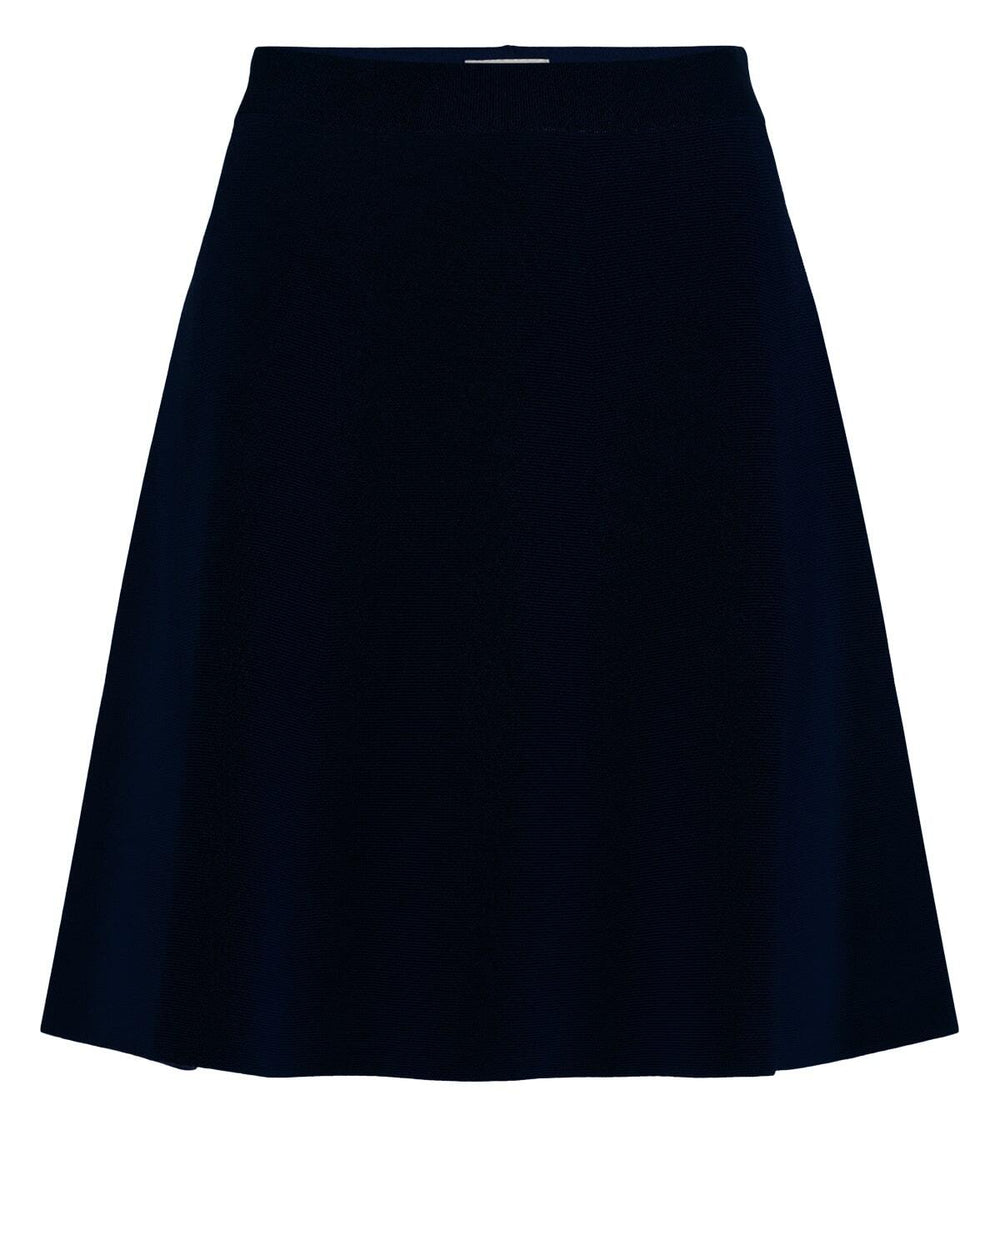 NULILLYPILLY Dark Sapphire Skirt